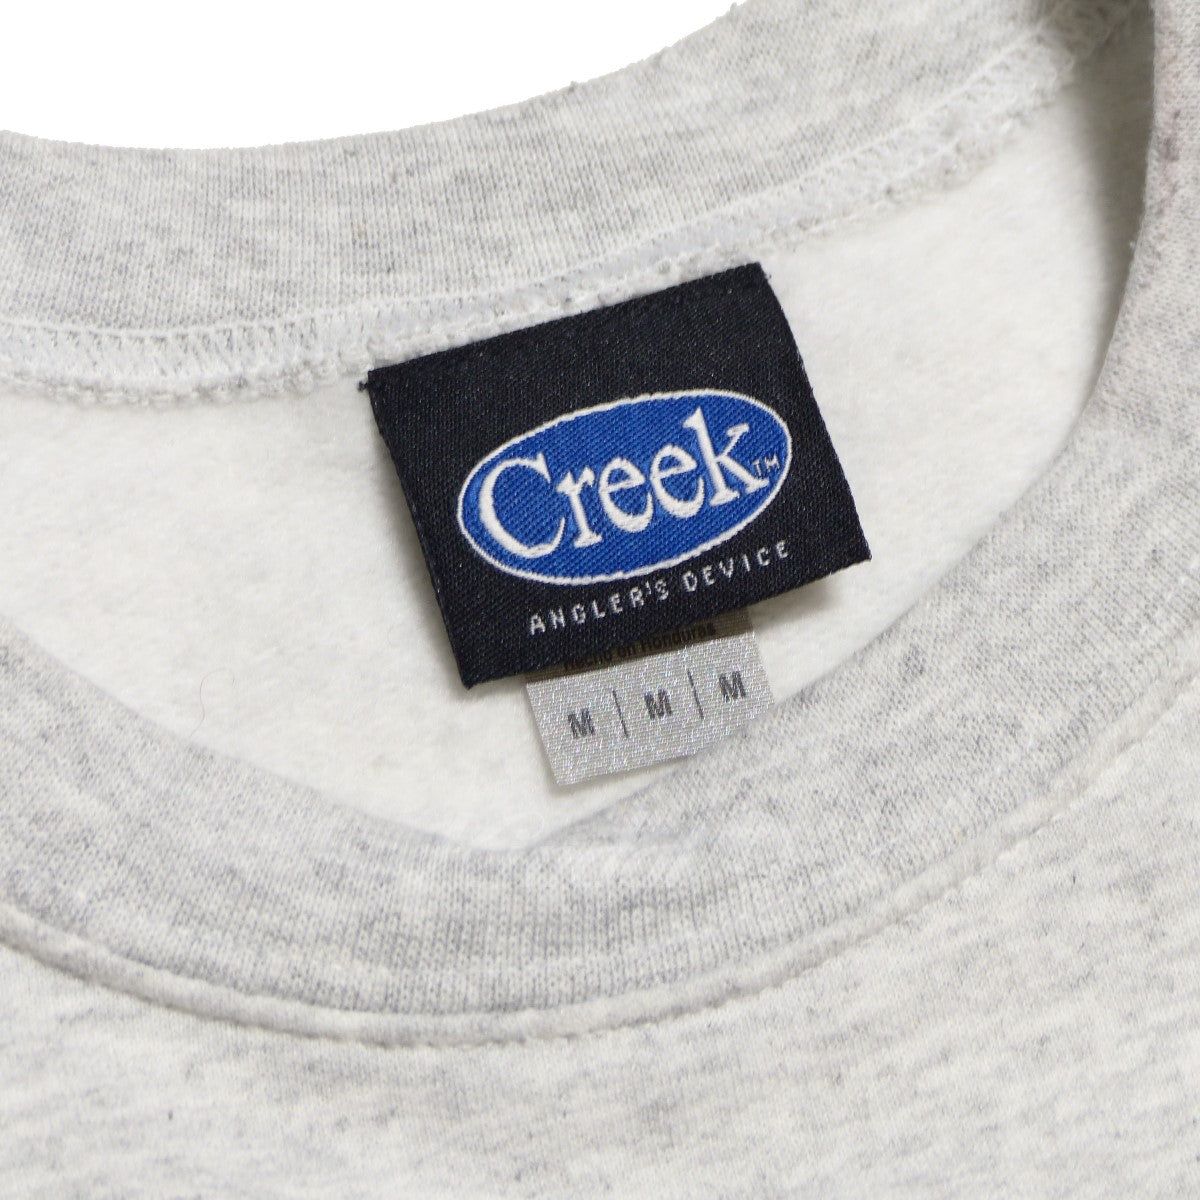 Creek Angler’s Device(クリーク アングラーズデバイス) Logo Crewneck Sweatshirt  ロゴプリントスウェットトレーナー